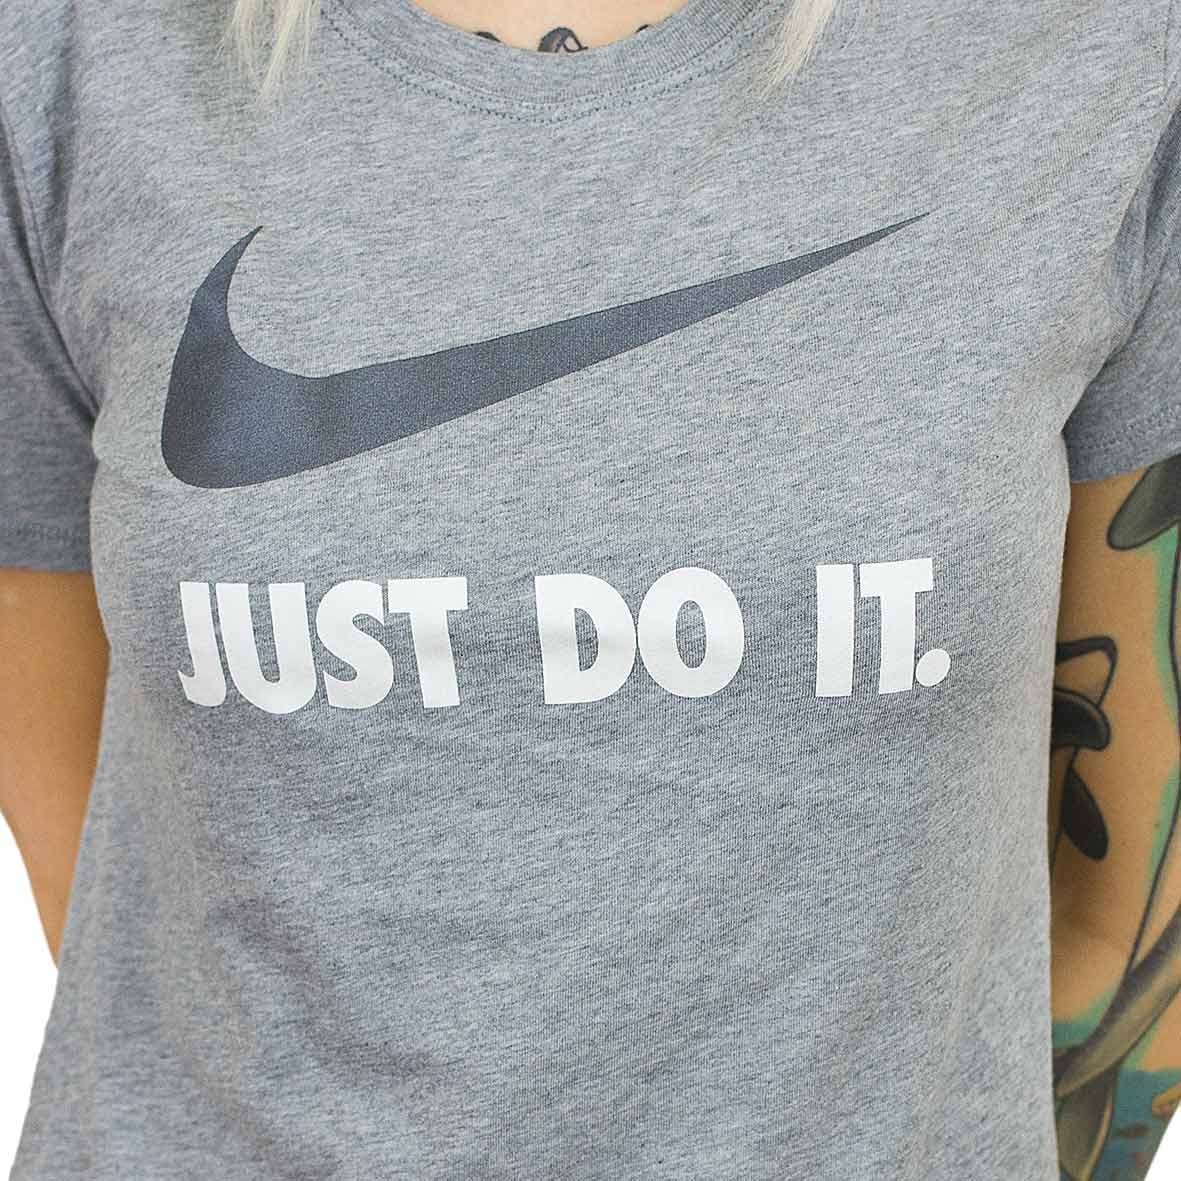 ☆ Nike Damen T-Shirt Crew Just Do It Swoosh grau/schwarz - hier bestellen!